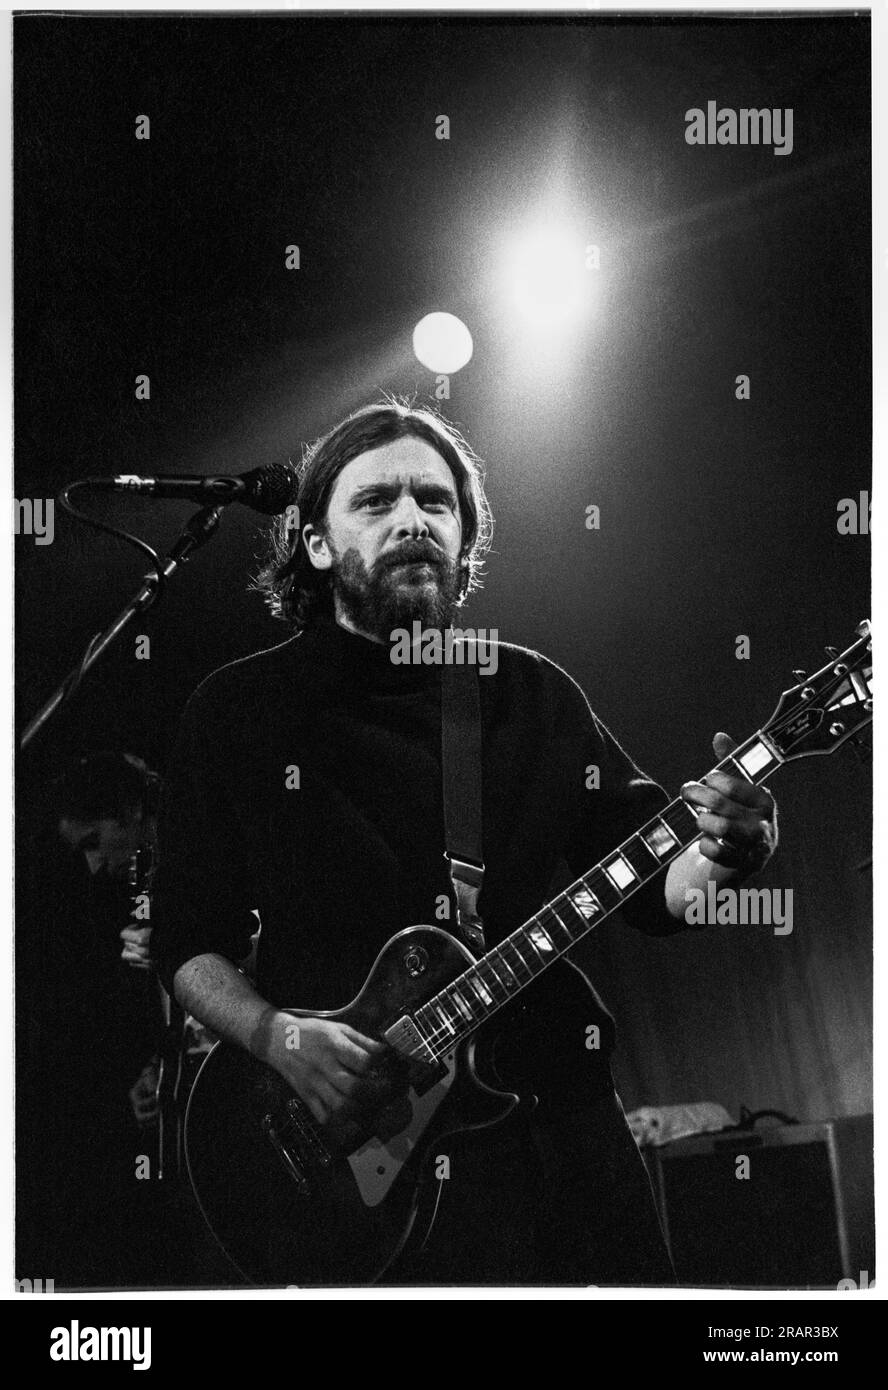 Norman Blake vom Teenage Fanclub spielt am 20. Mai 1995 live in der Studentenunion der Cardiff University. Foto: Rob Watkins Stockfoto